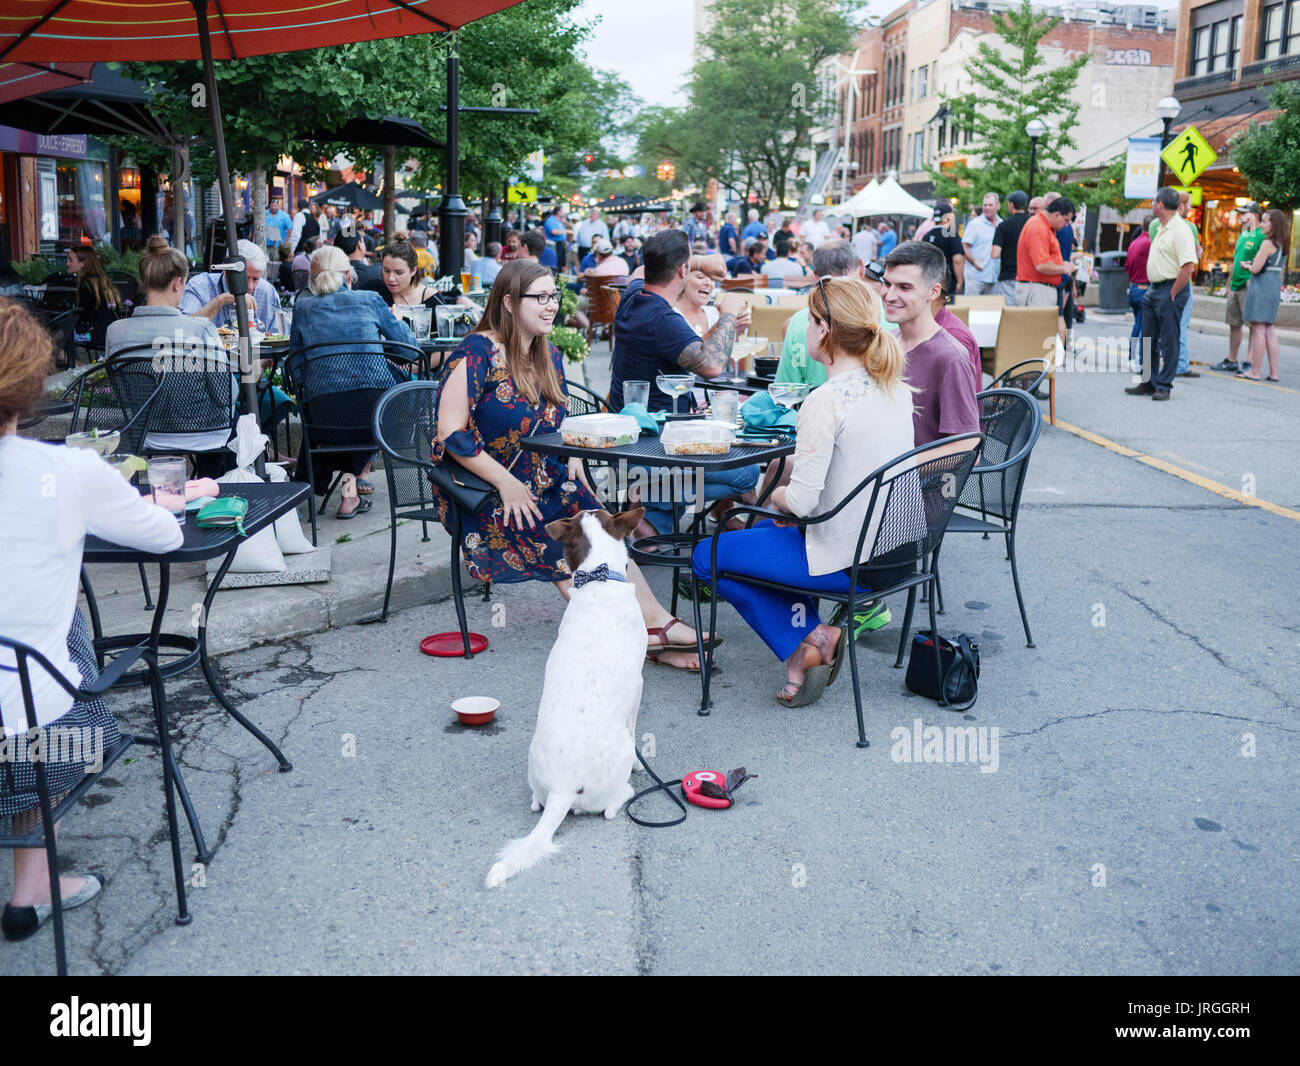 Dog waiting hopefully at table. Sidewalk café, Ann Arbor Michigan. Stock Photo